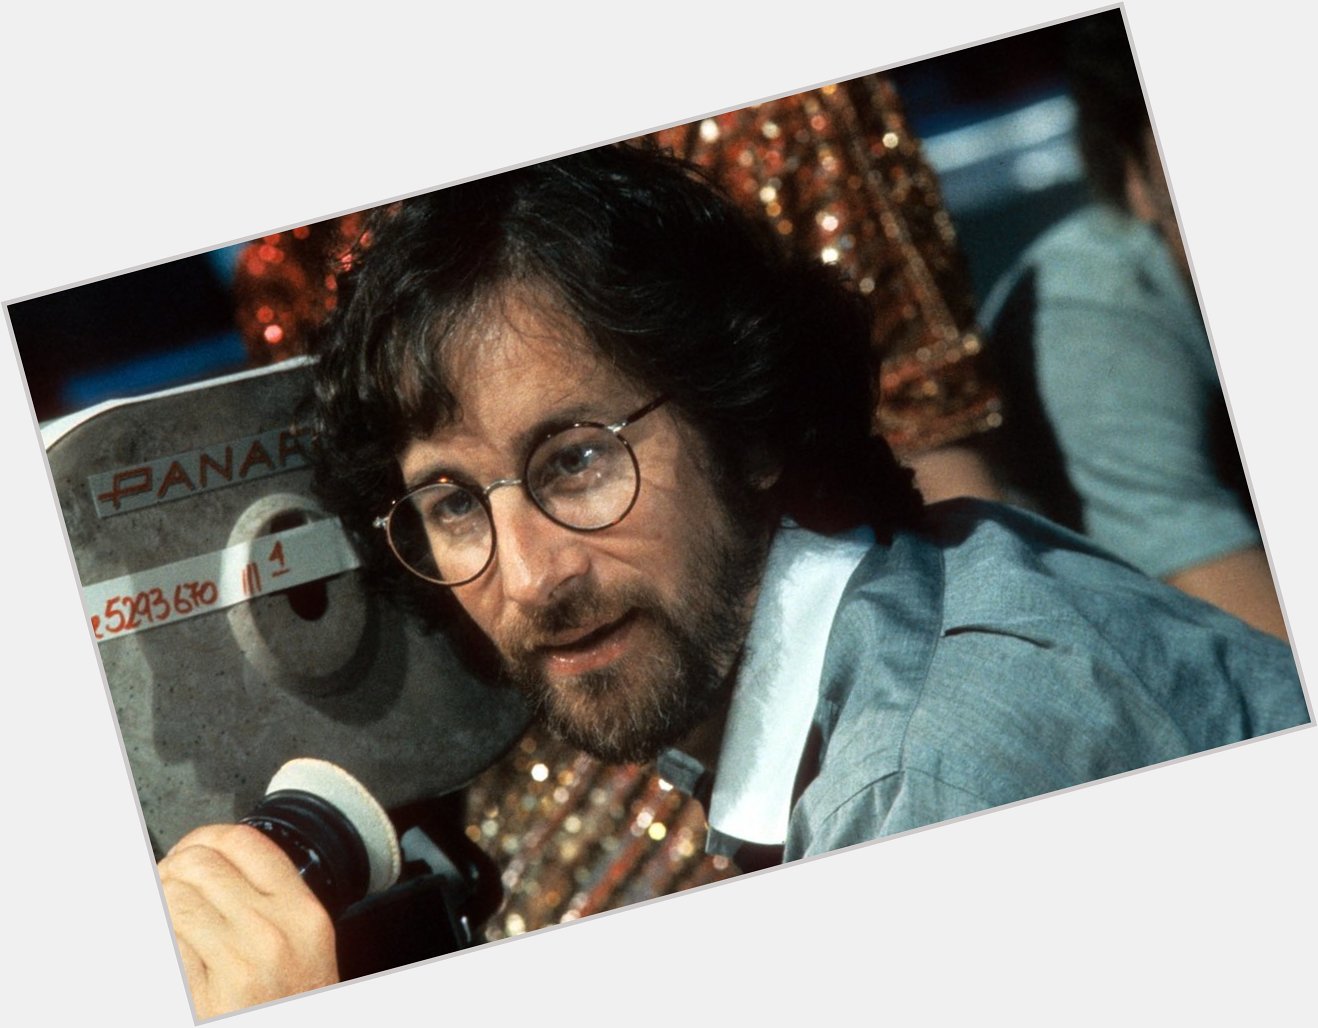 Happy birthday to Steven Spielberg! 